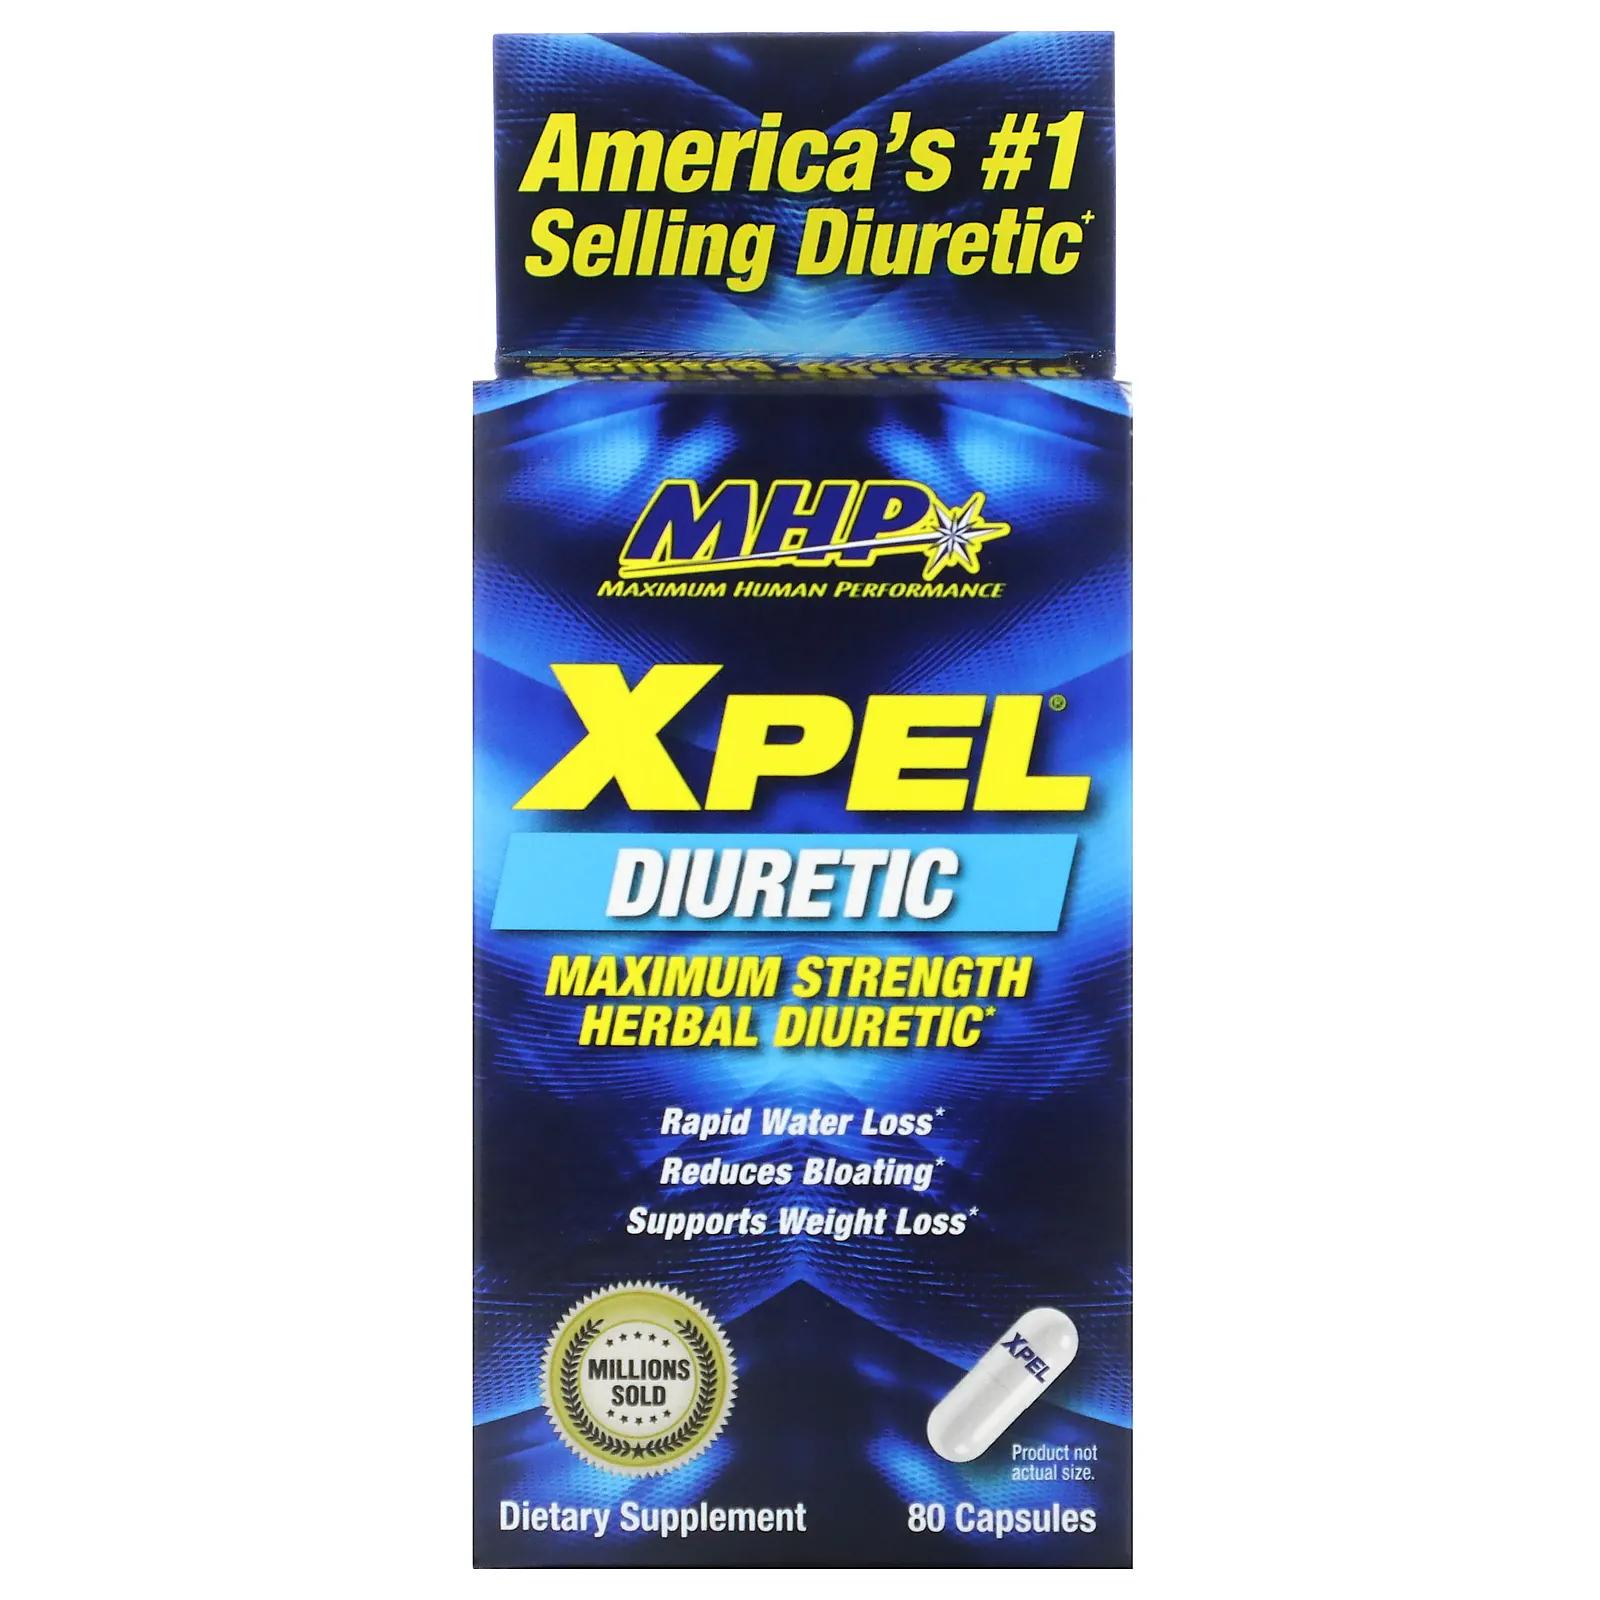 Maximum Human Performance LLC Xpel травяной диуретик максимальной эффективности 80 капсул